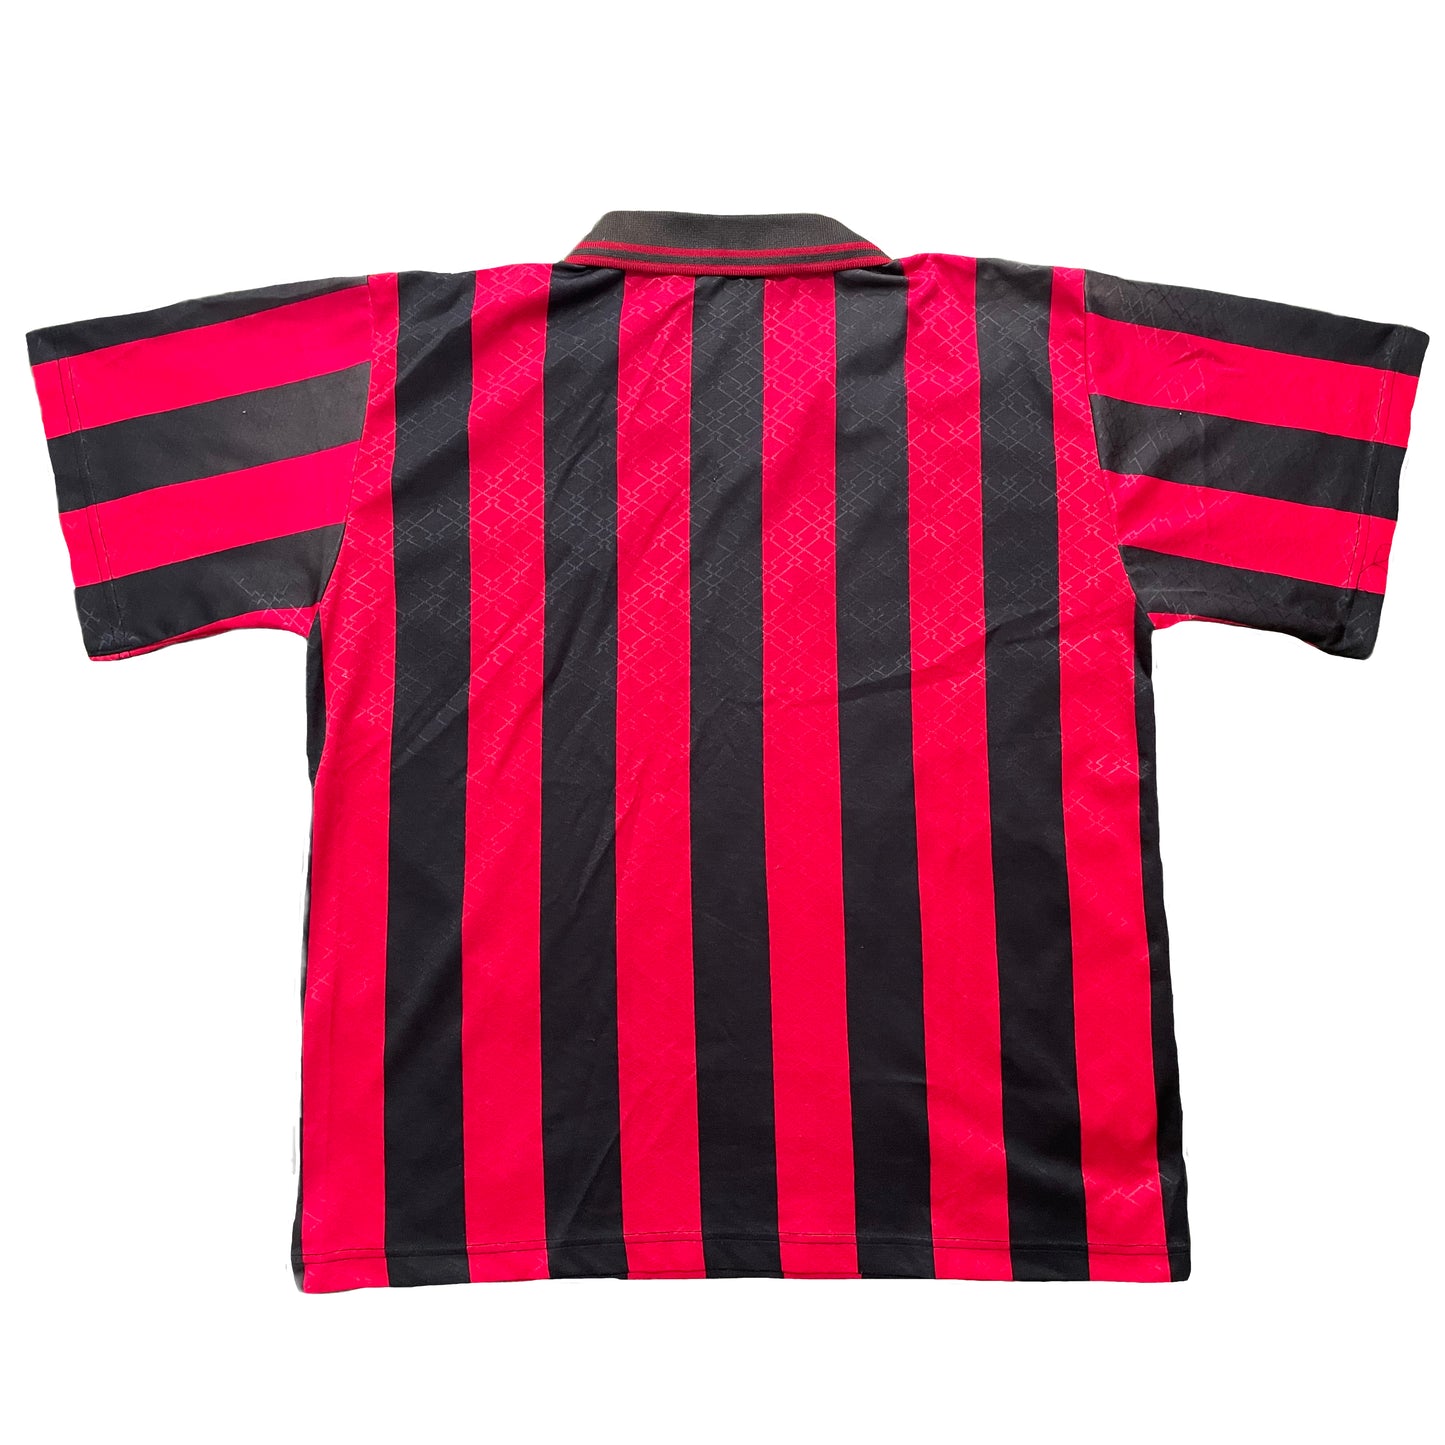 1995-1996 AC Milan home shirt (XL)